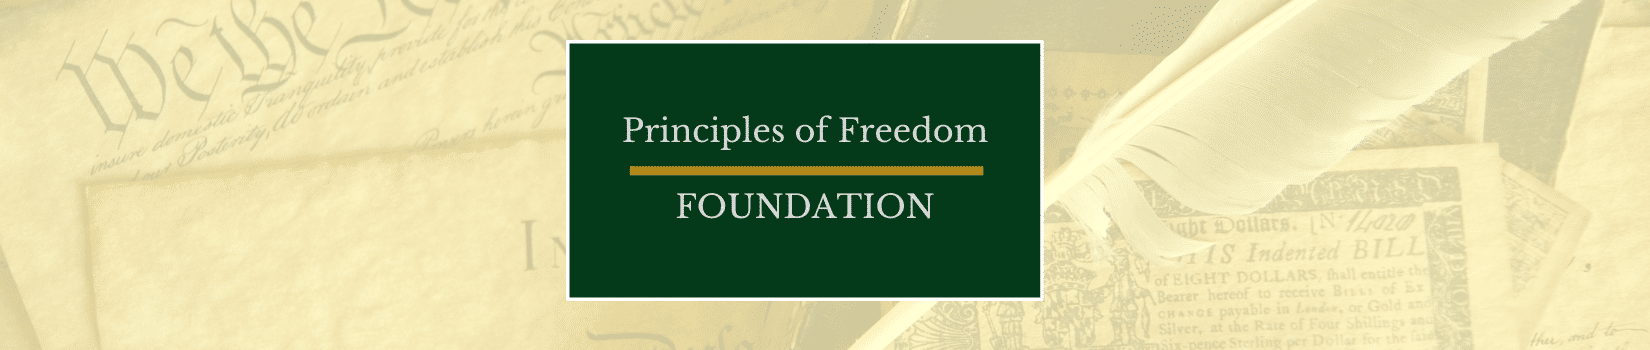 Principles of Freedom Foundation